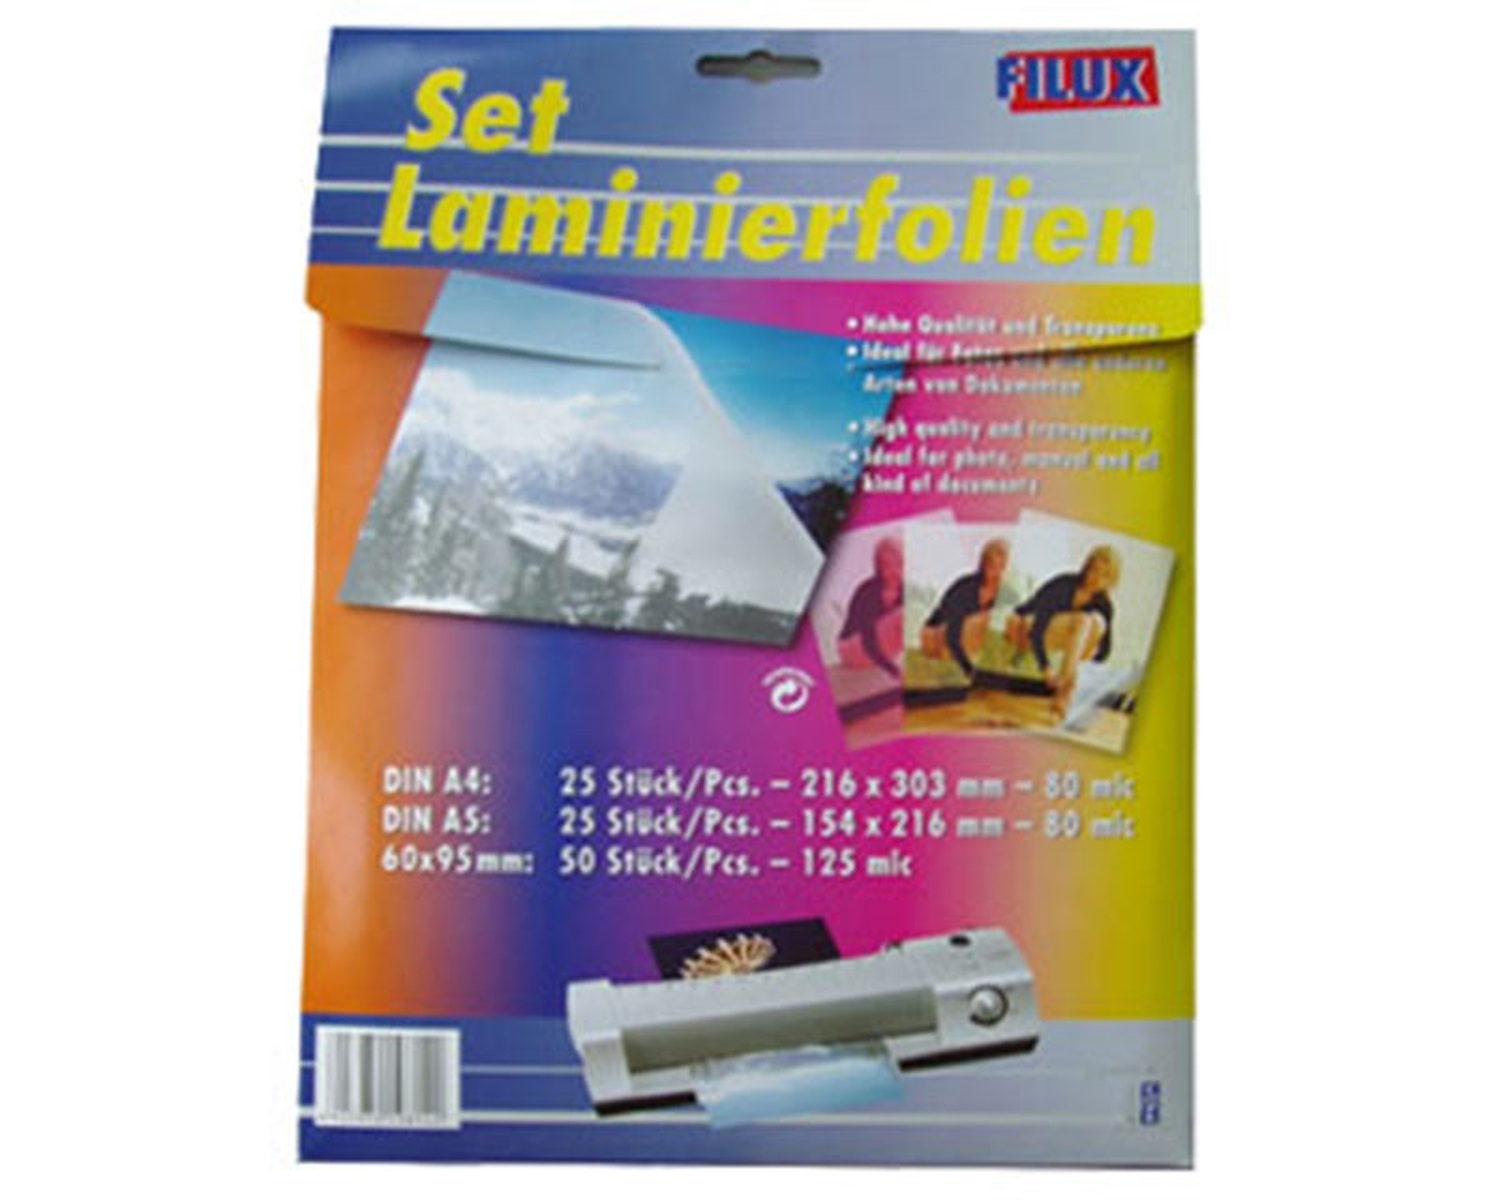 FILUX Laminierfolien Set A4, A5 und Visitenkartengrsse, 100 Stk.